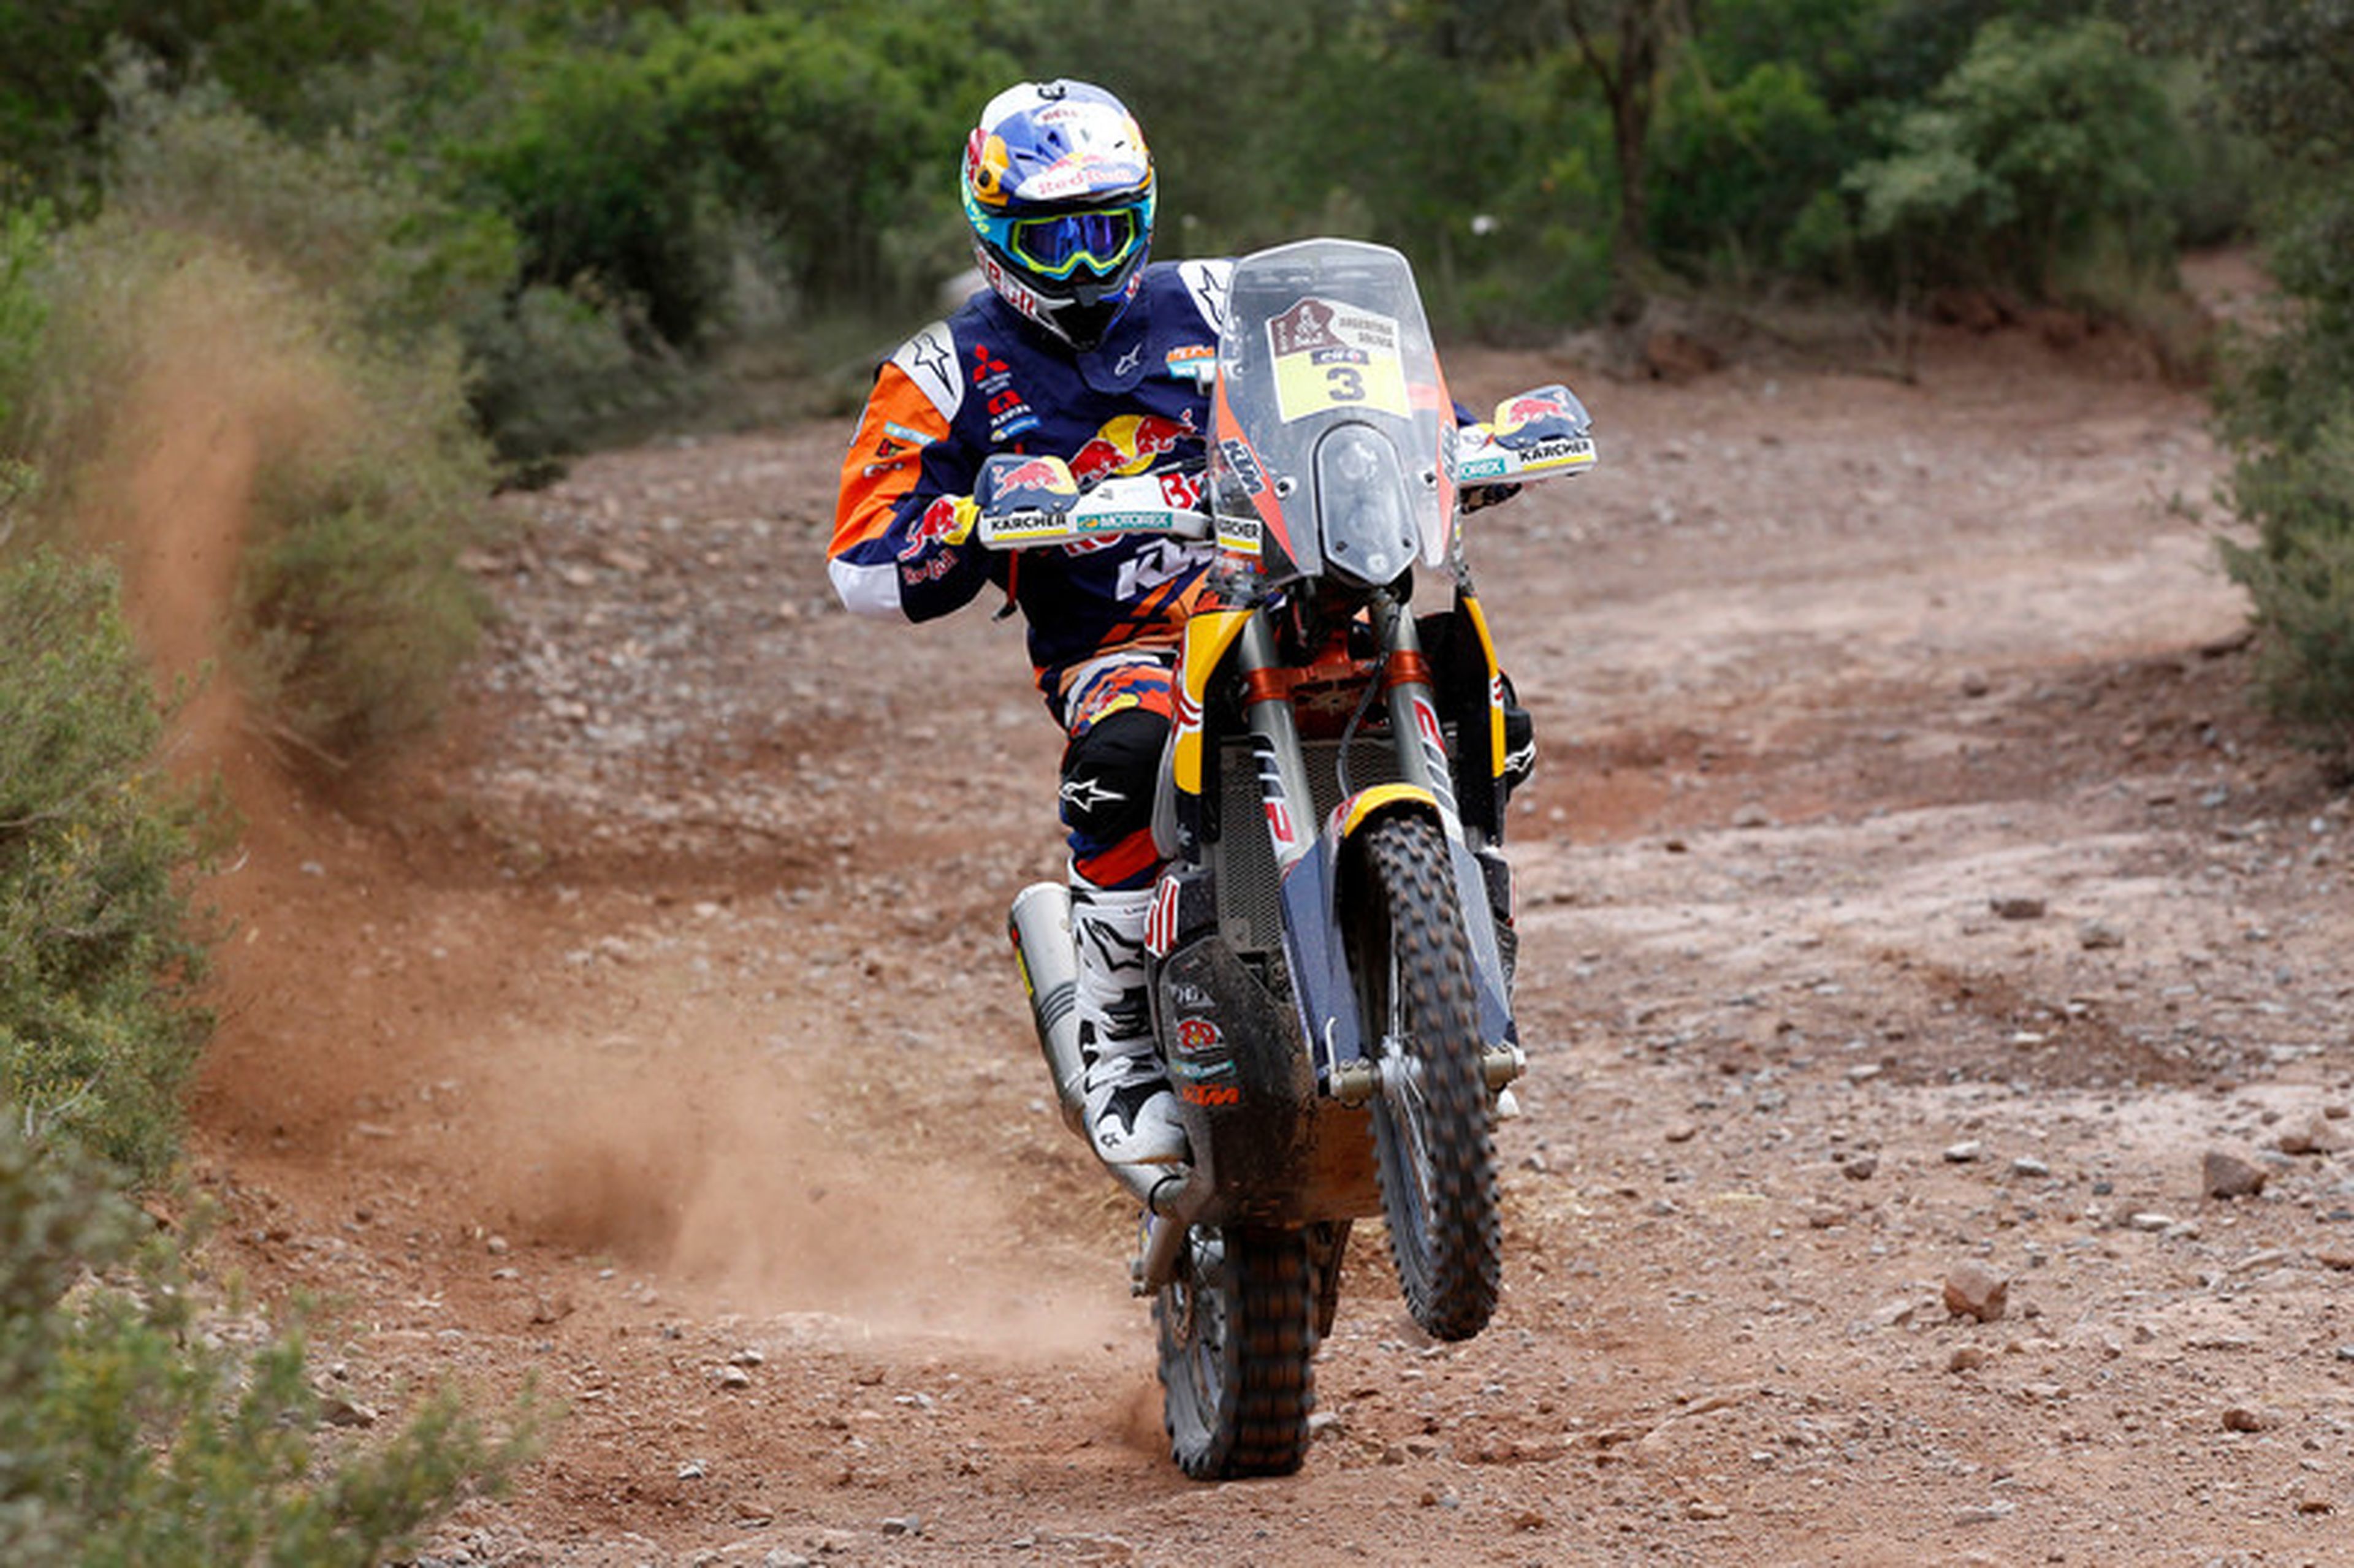 Dakar 2016: Etapa 2. Motos: victoria y liderato para Price